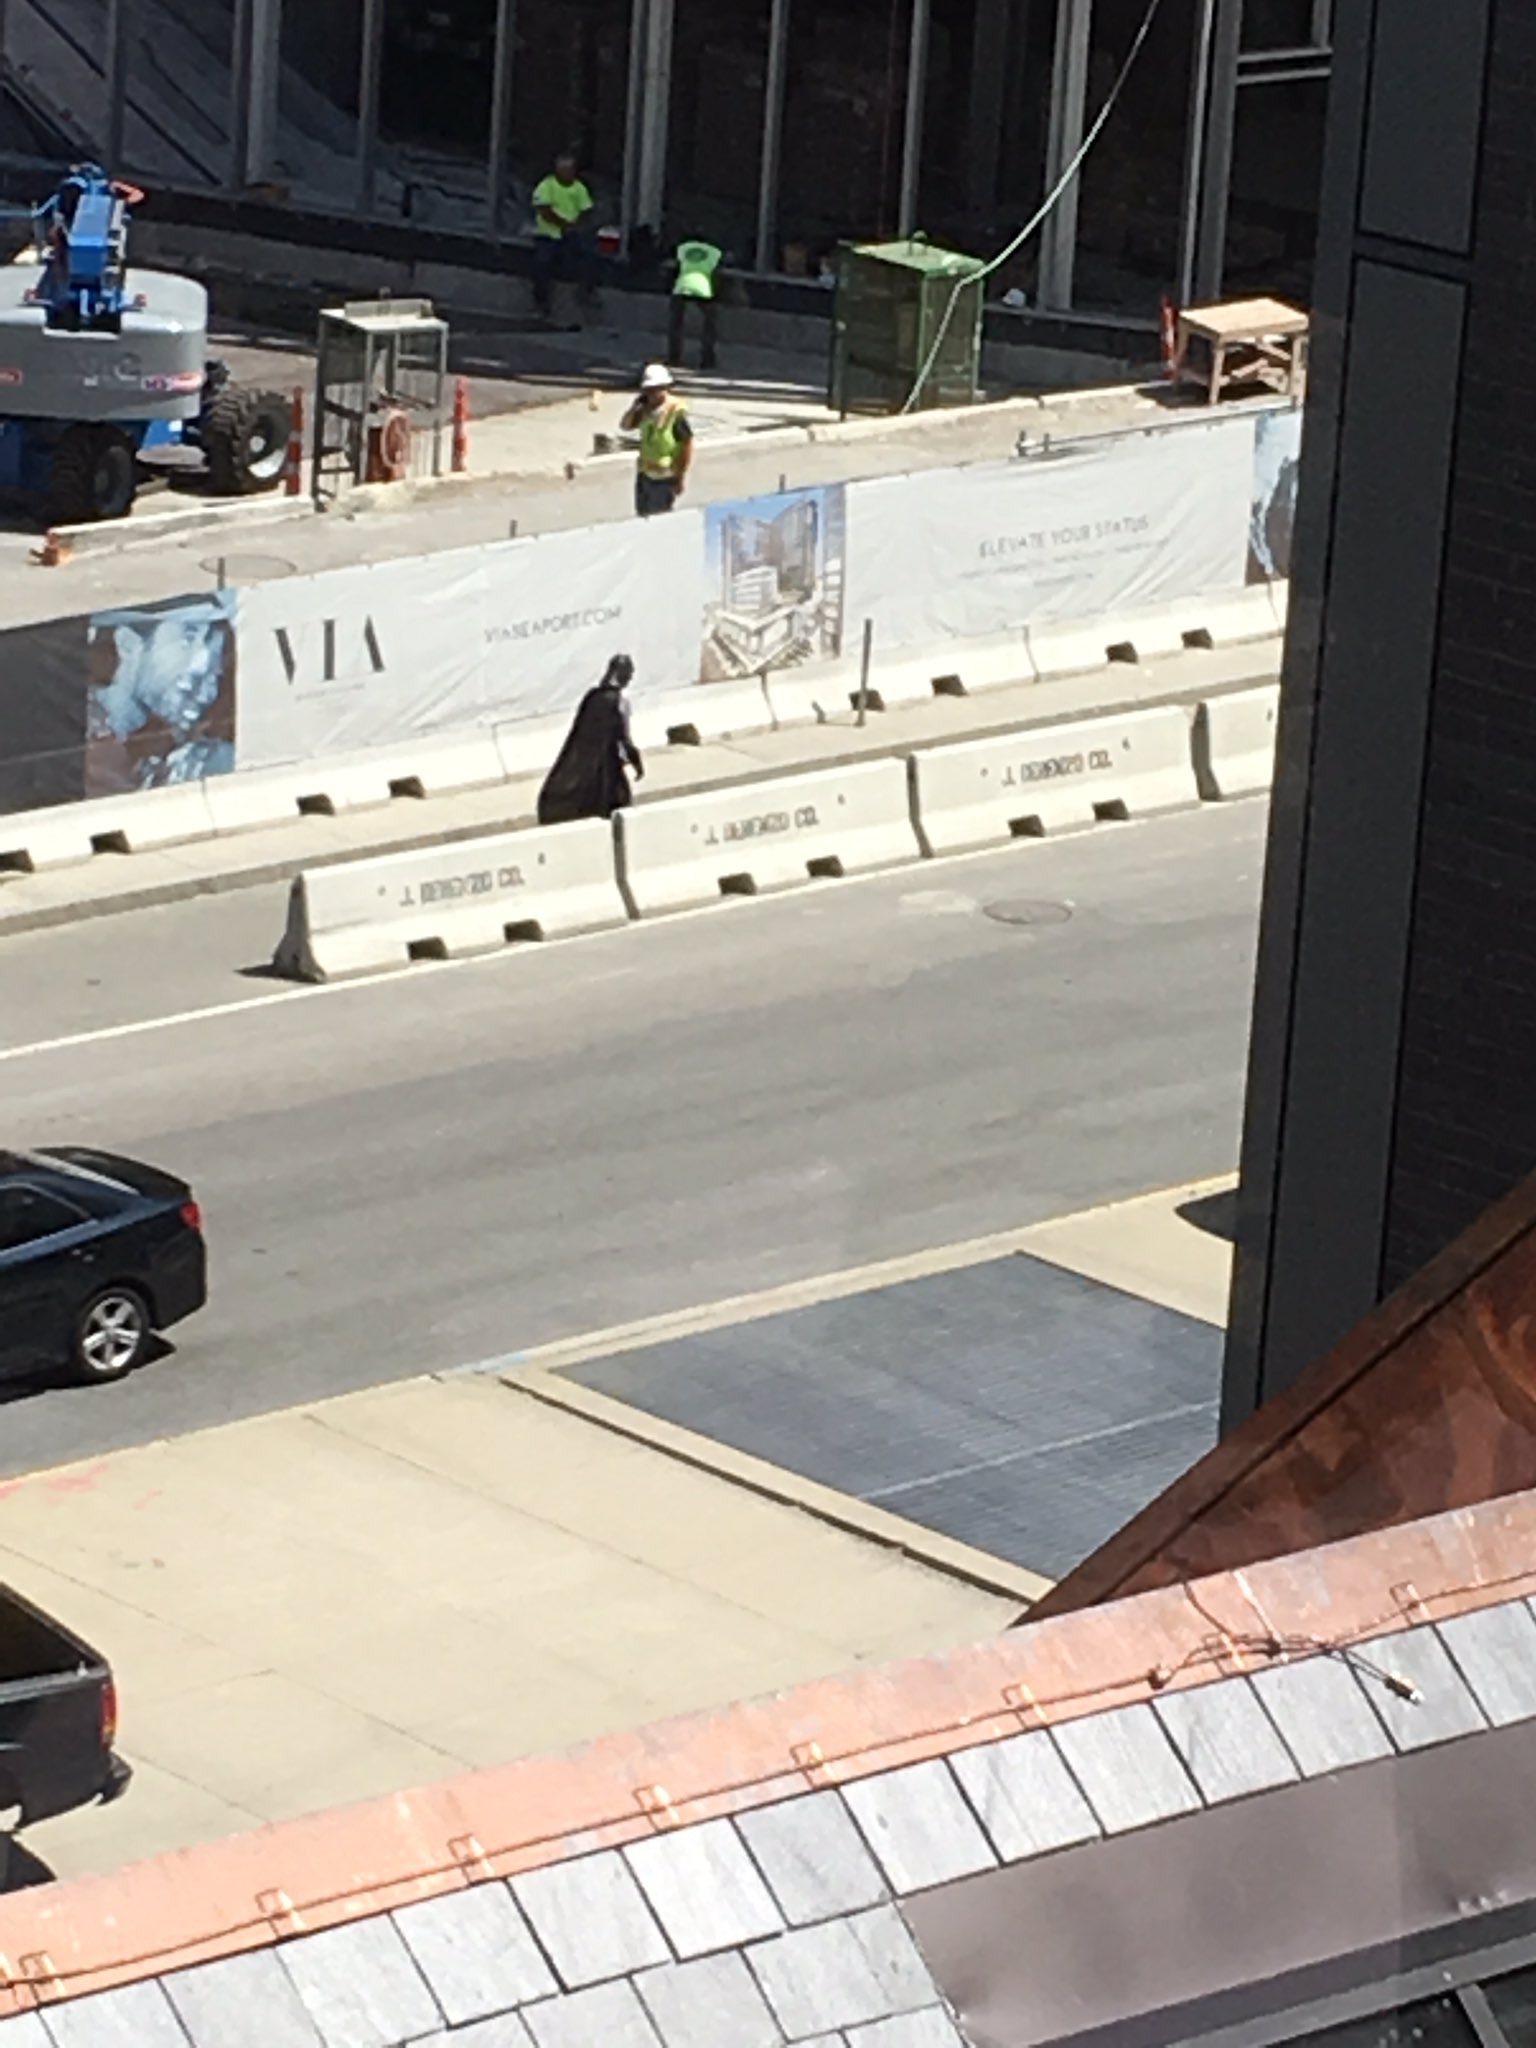 Batman wanders around a South Boston waterfront construction zone